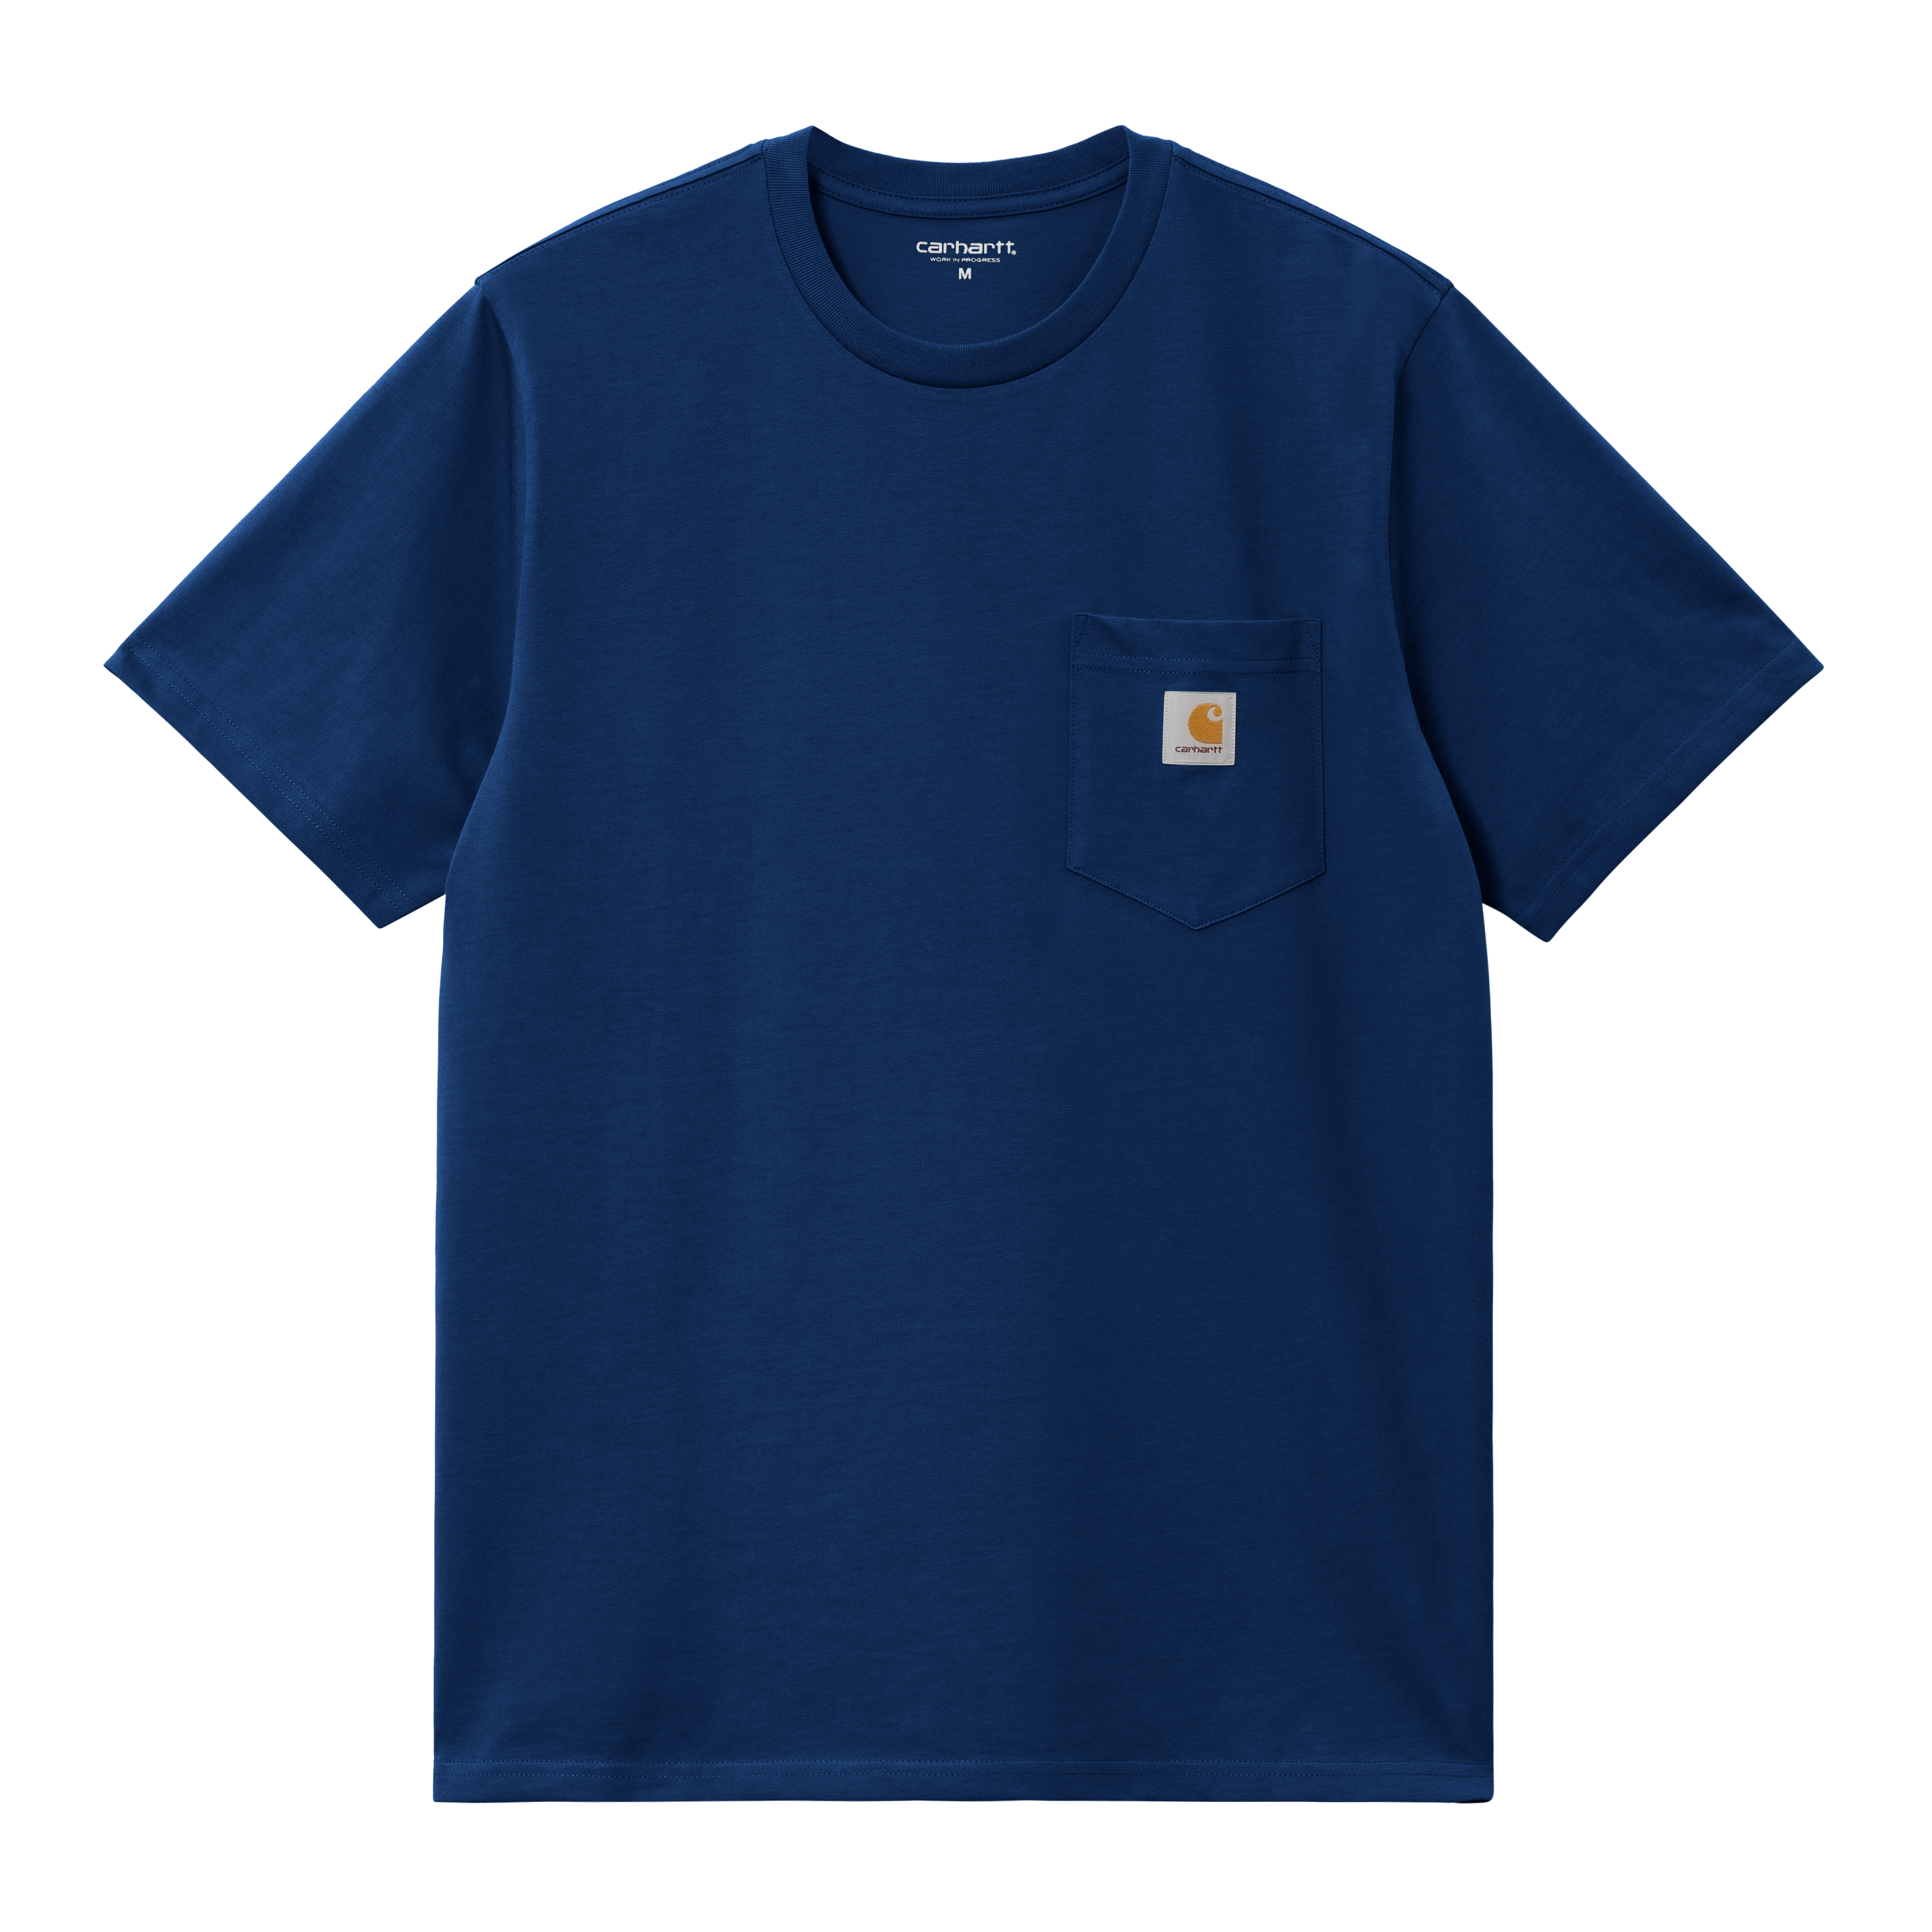 Carhartt WIP Short Sleeve Pocket T-Shirt in Blau